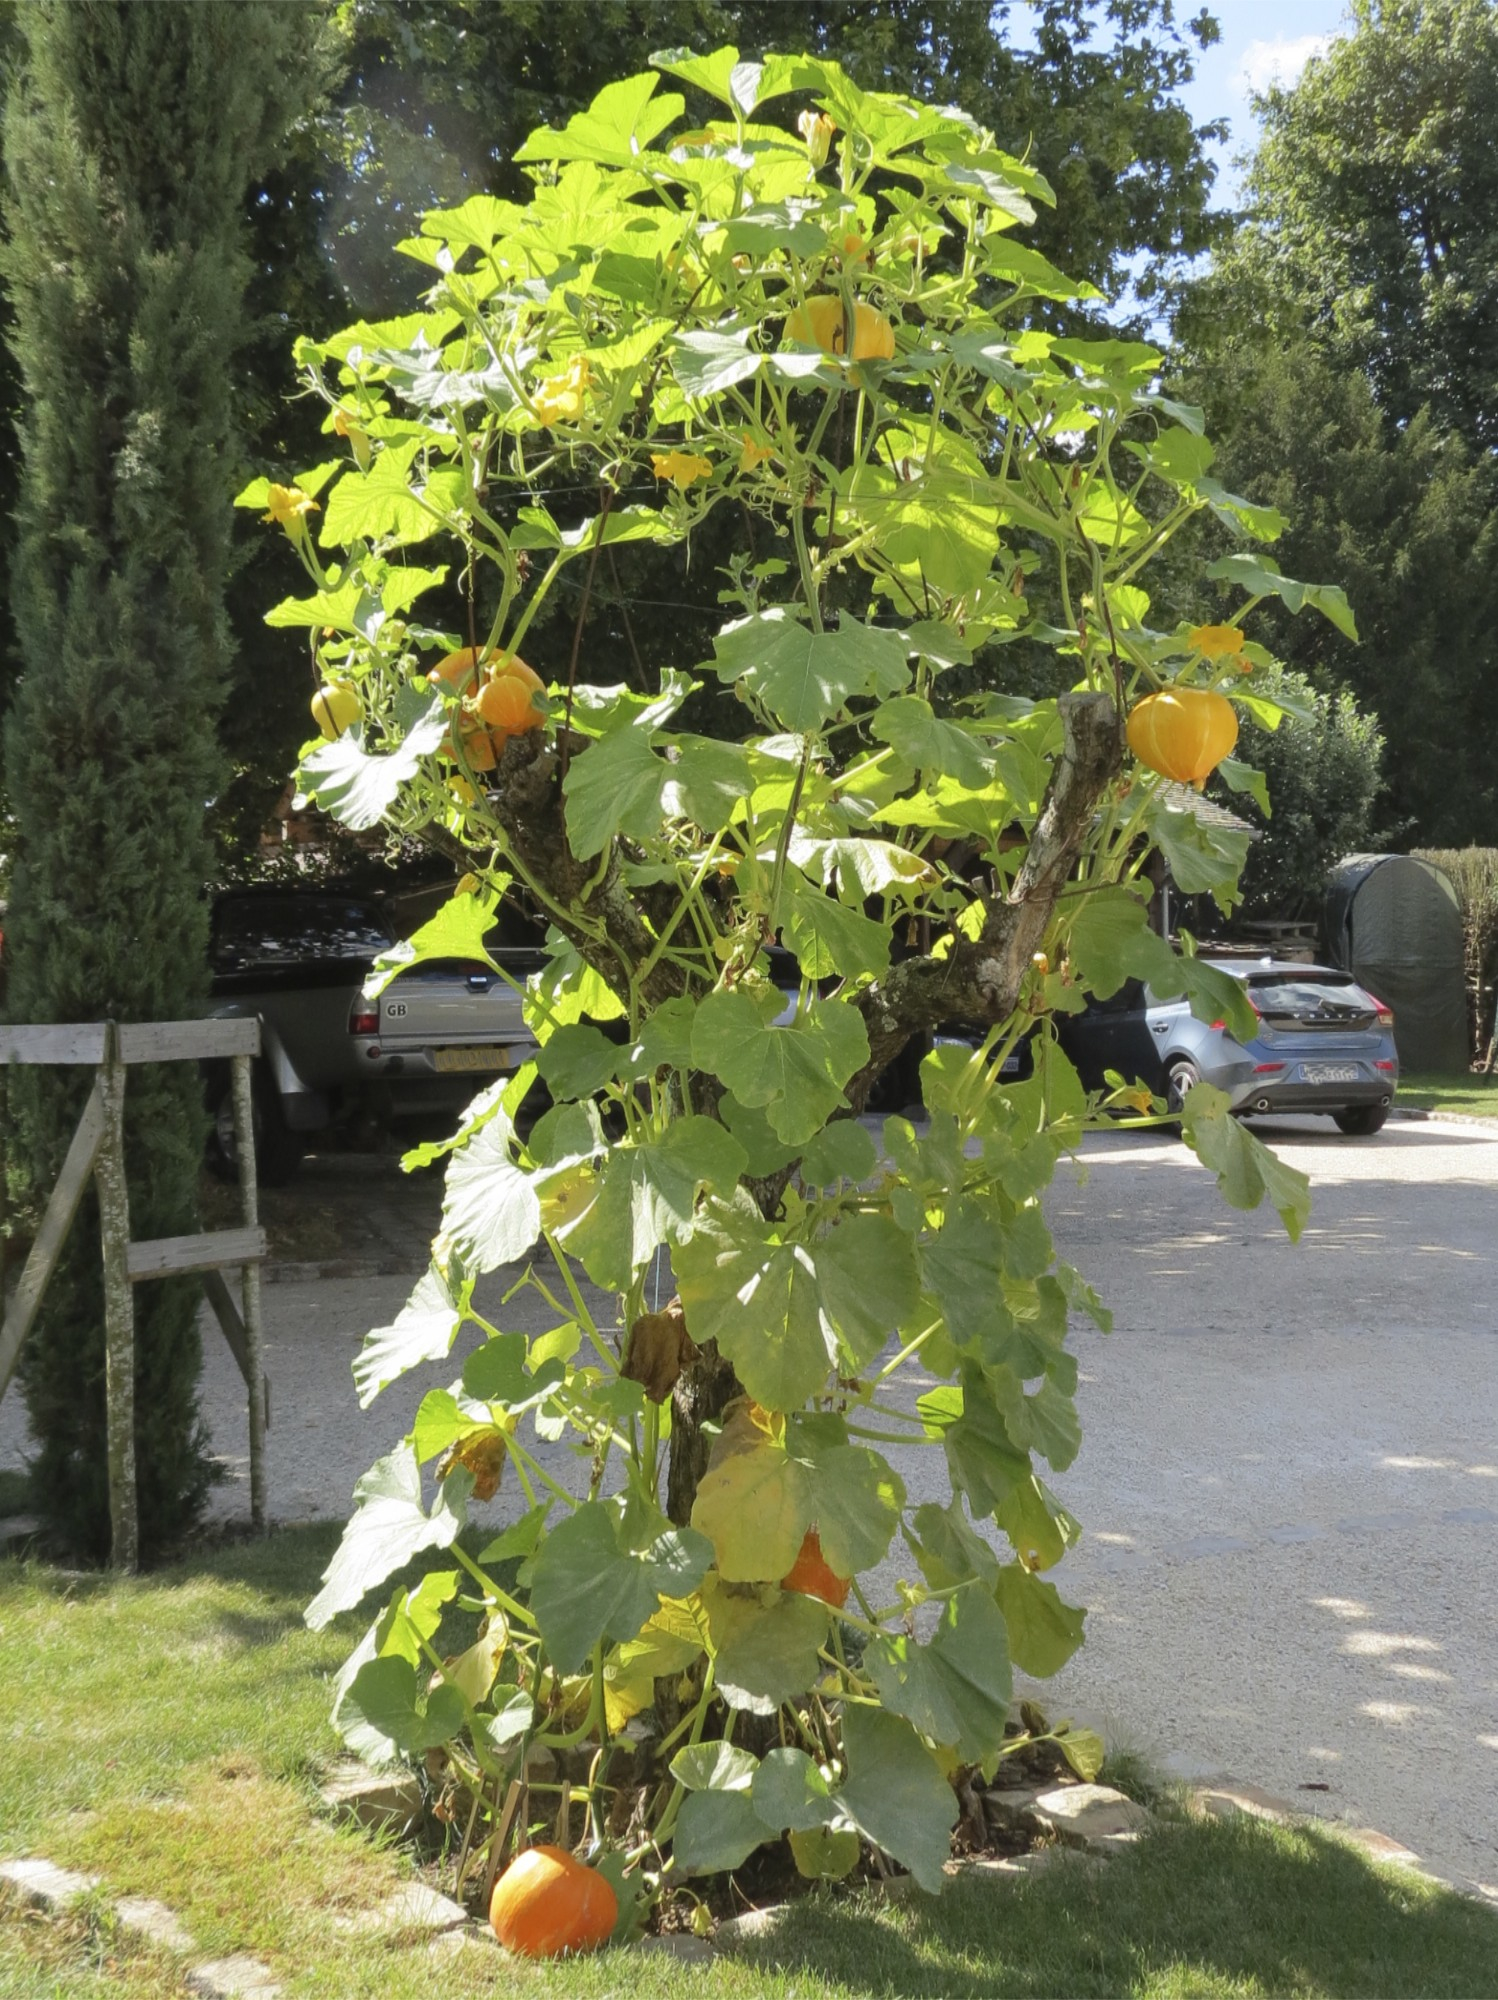 Julian Cassell's DIY Blog » Blog Archive Pumpkin trees - HOW TO DIY